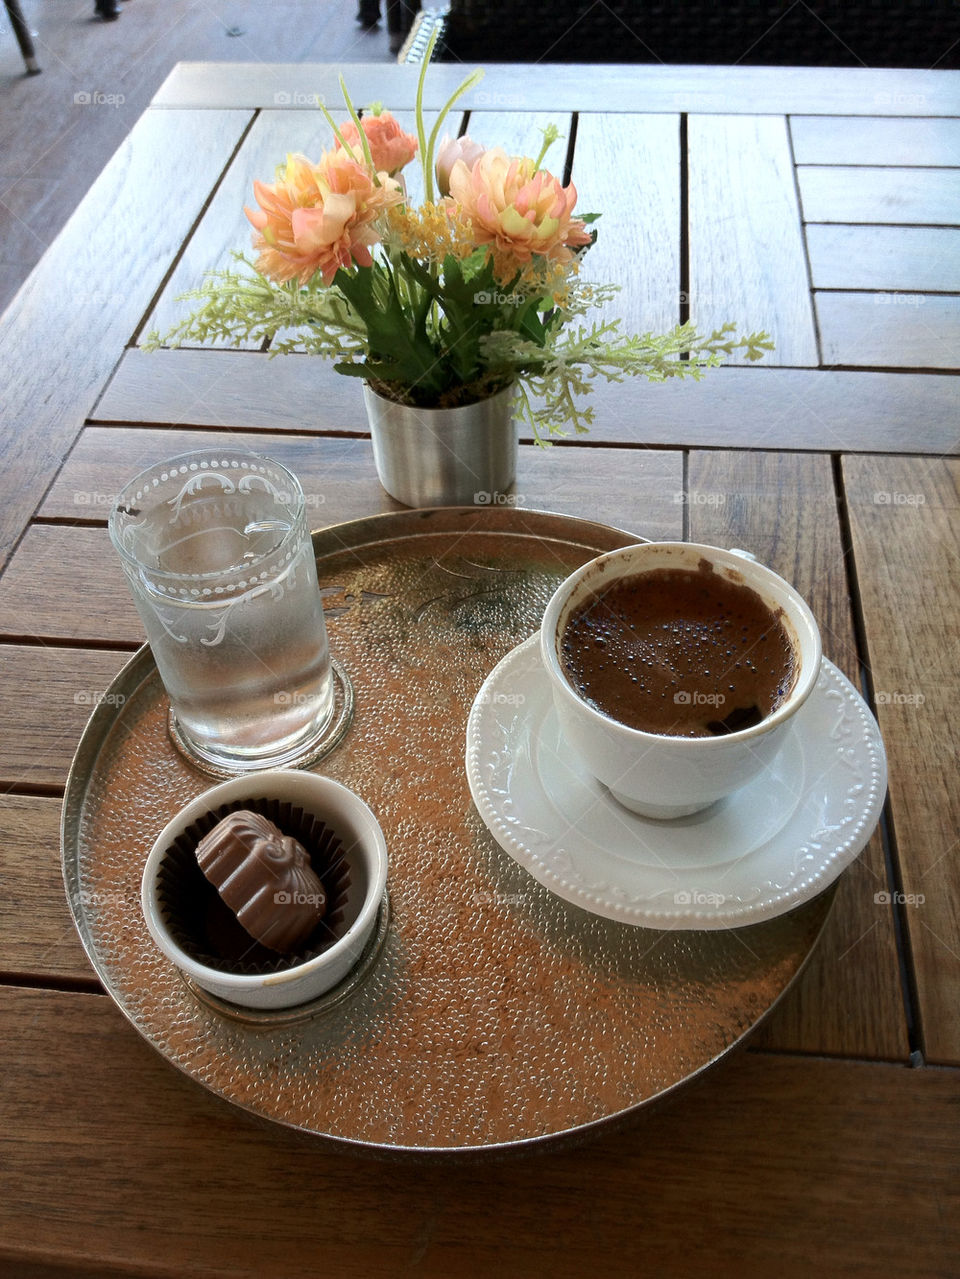 flower coffee glass tray by vkirtok